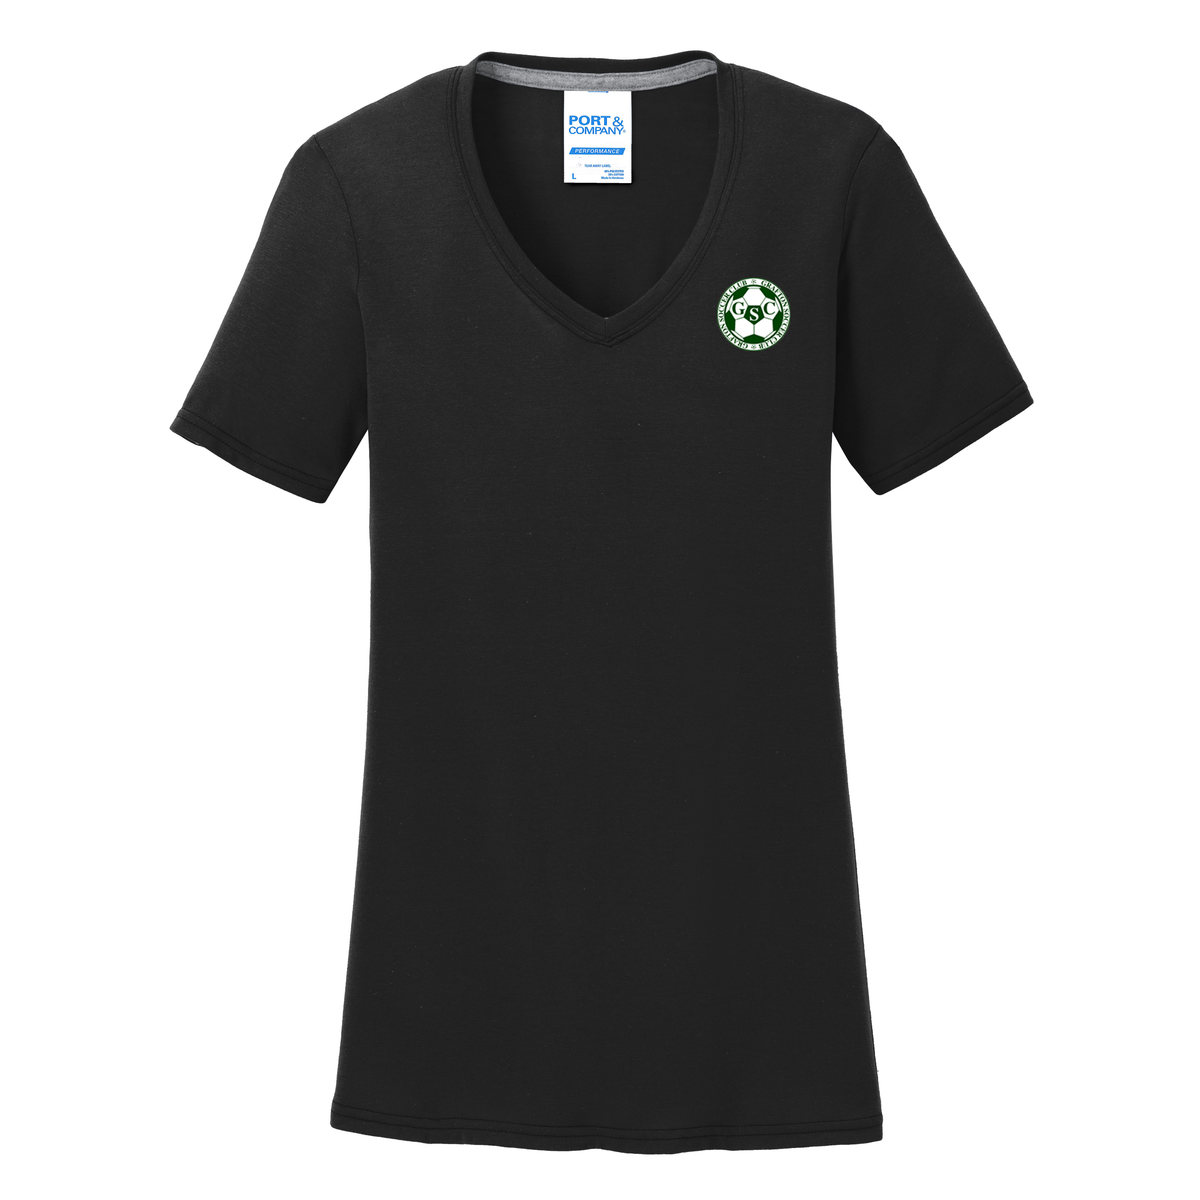 Grafton Youth Soccer Club Women's T-Shirt